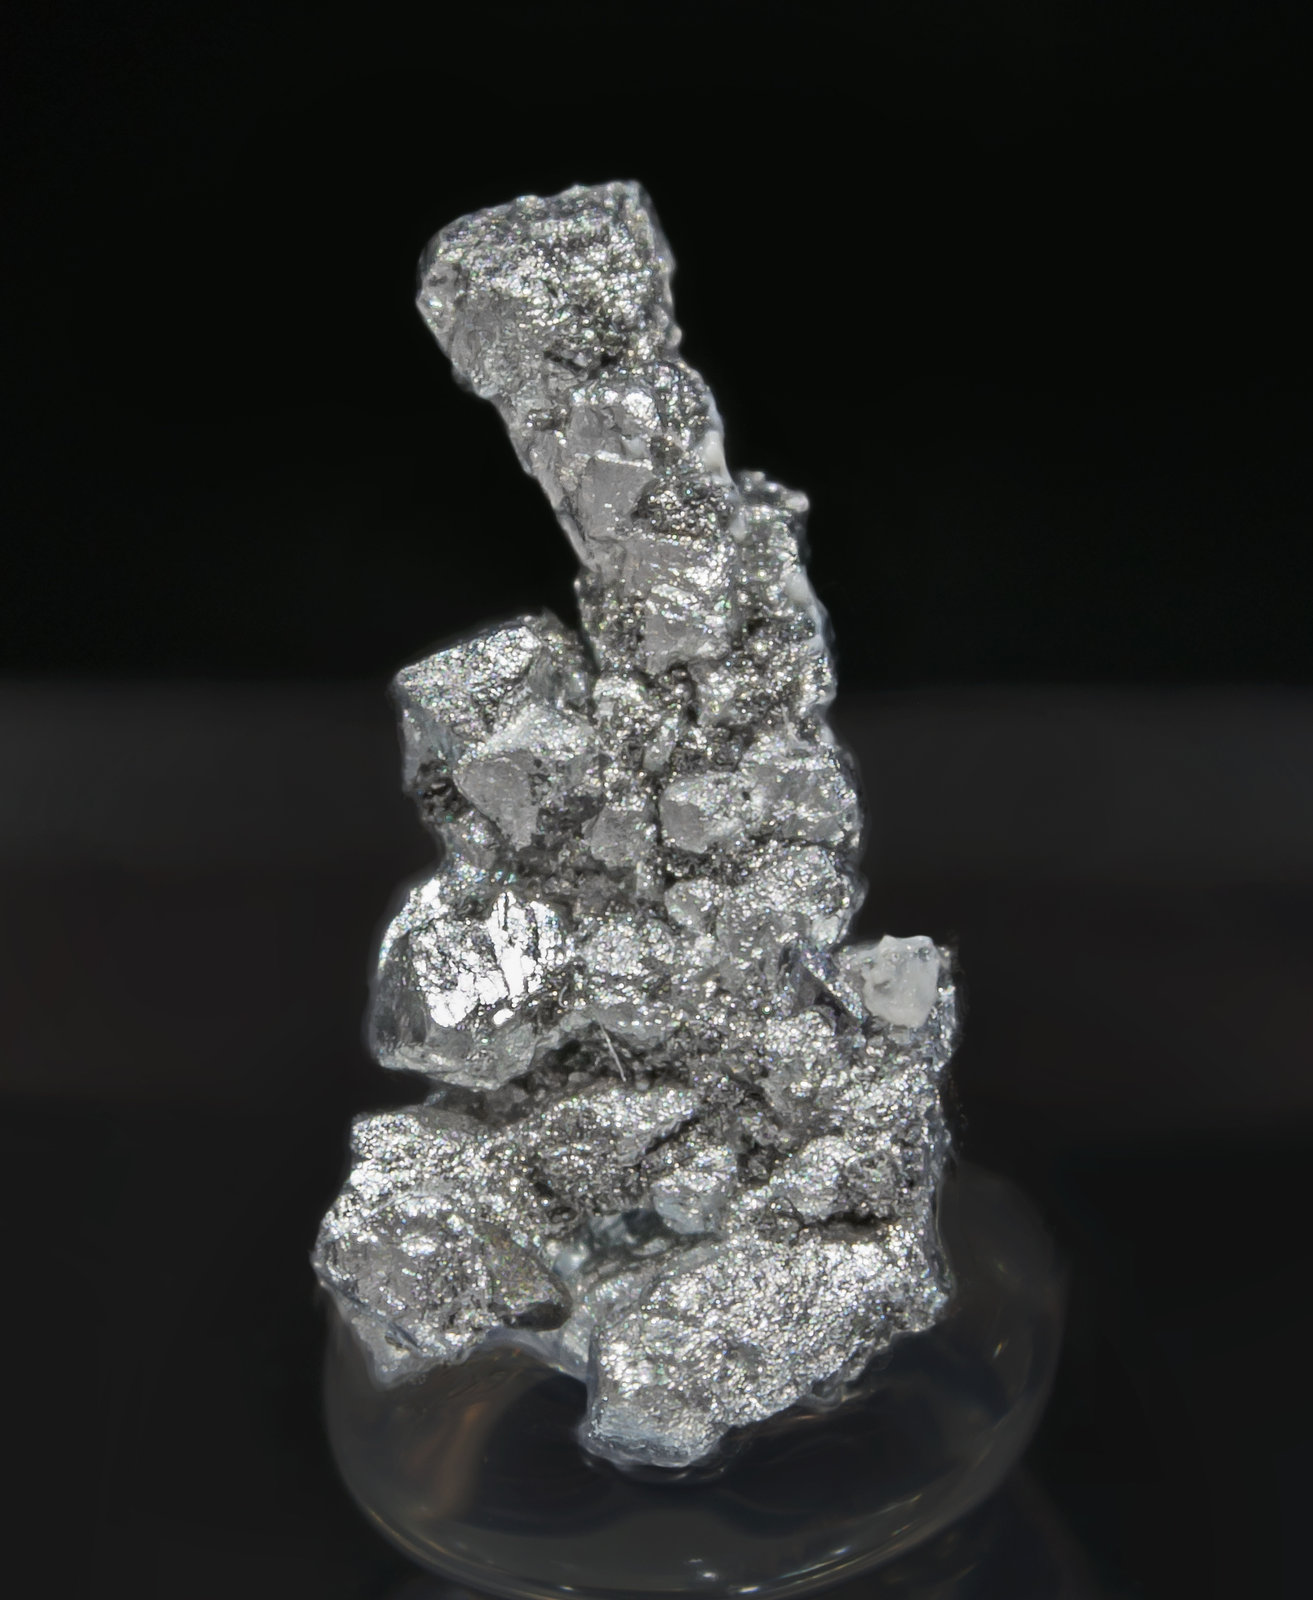 specimens/s_imagesAH4/Antimony-TX13AH4f.jpg